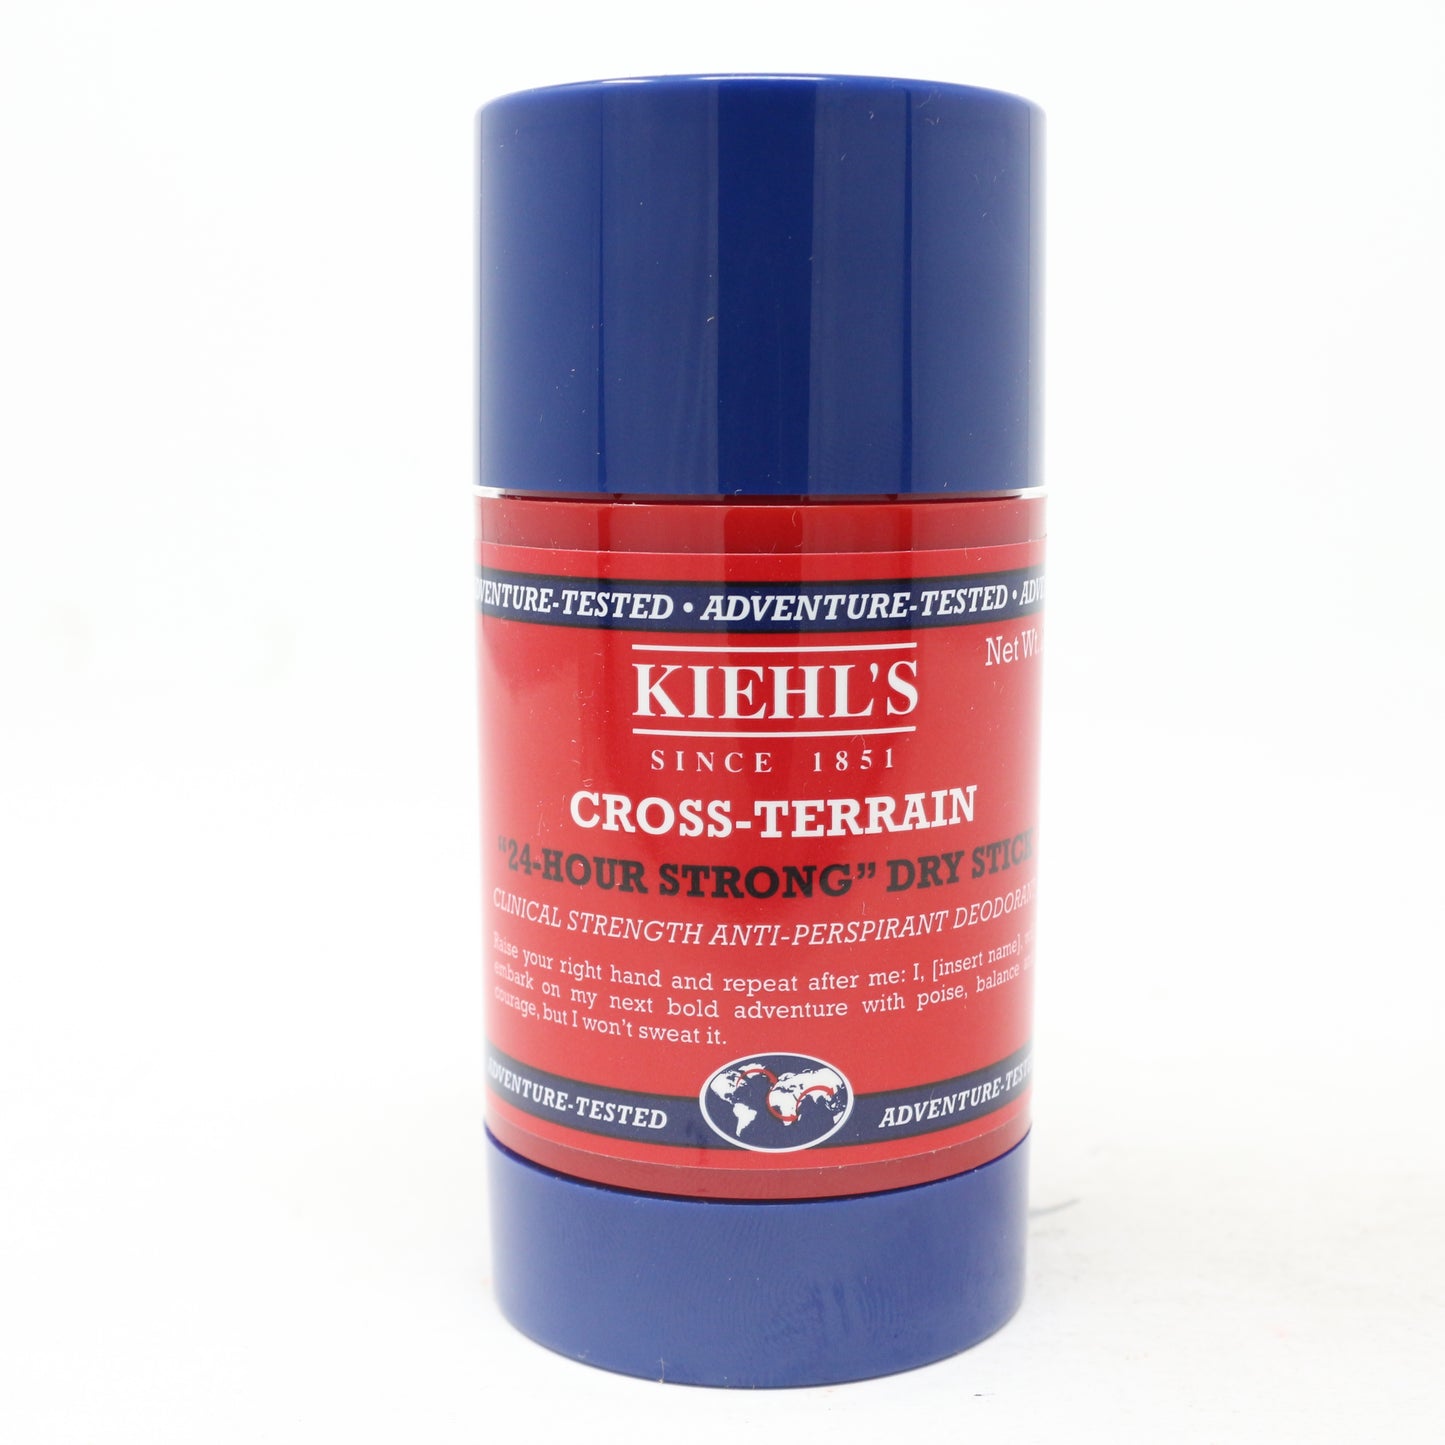 Cross-Terrain 24 Hour Strong Dry Skin Deodorant 75 g